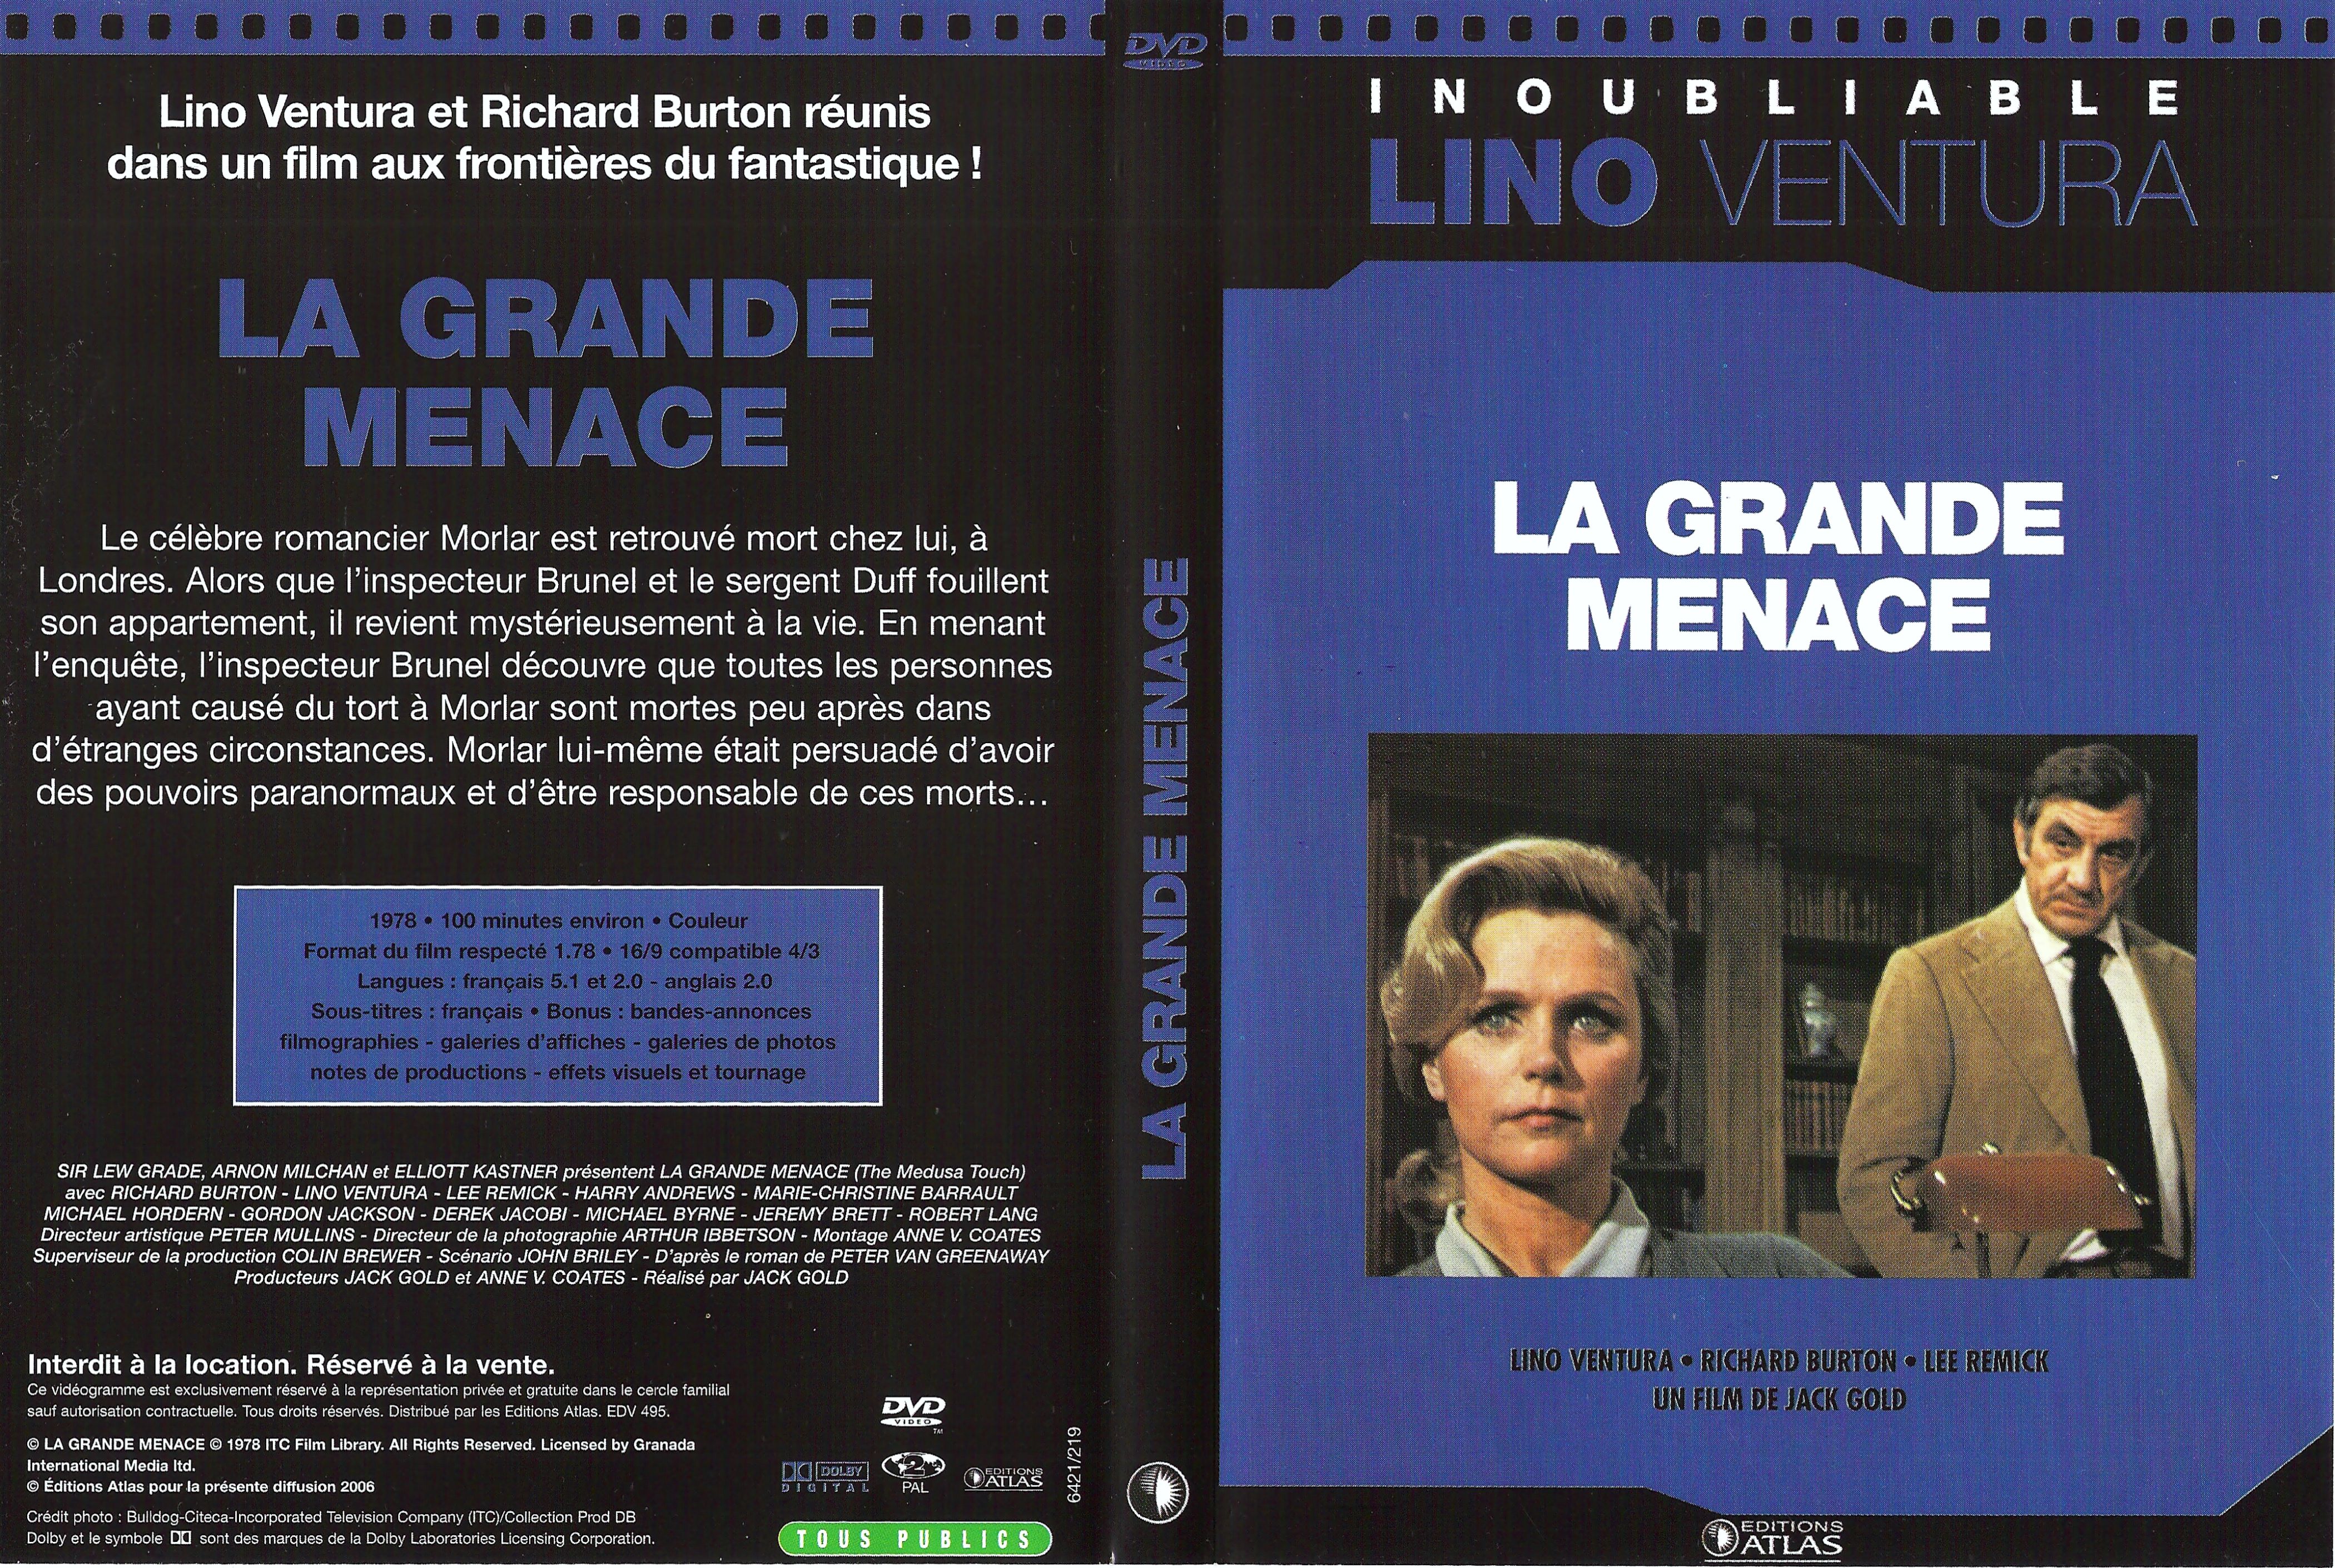 Jaquette DVD La grande menace v2